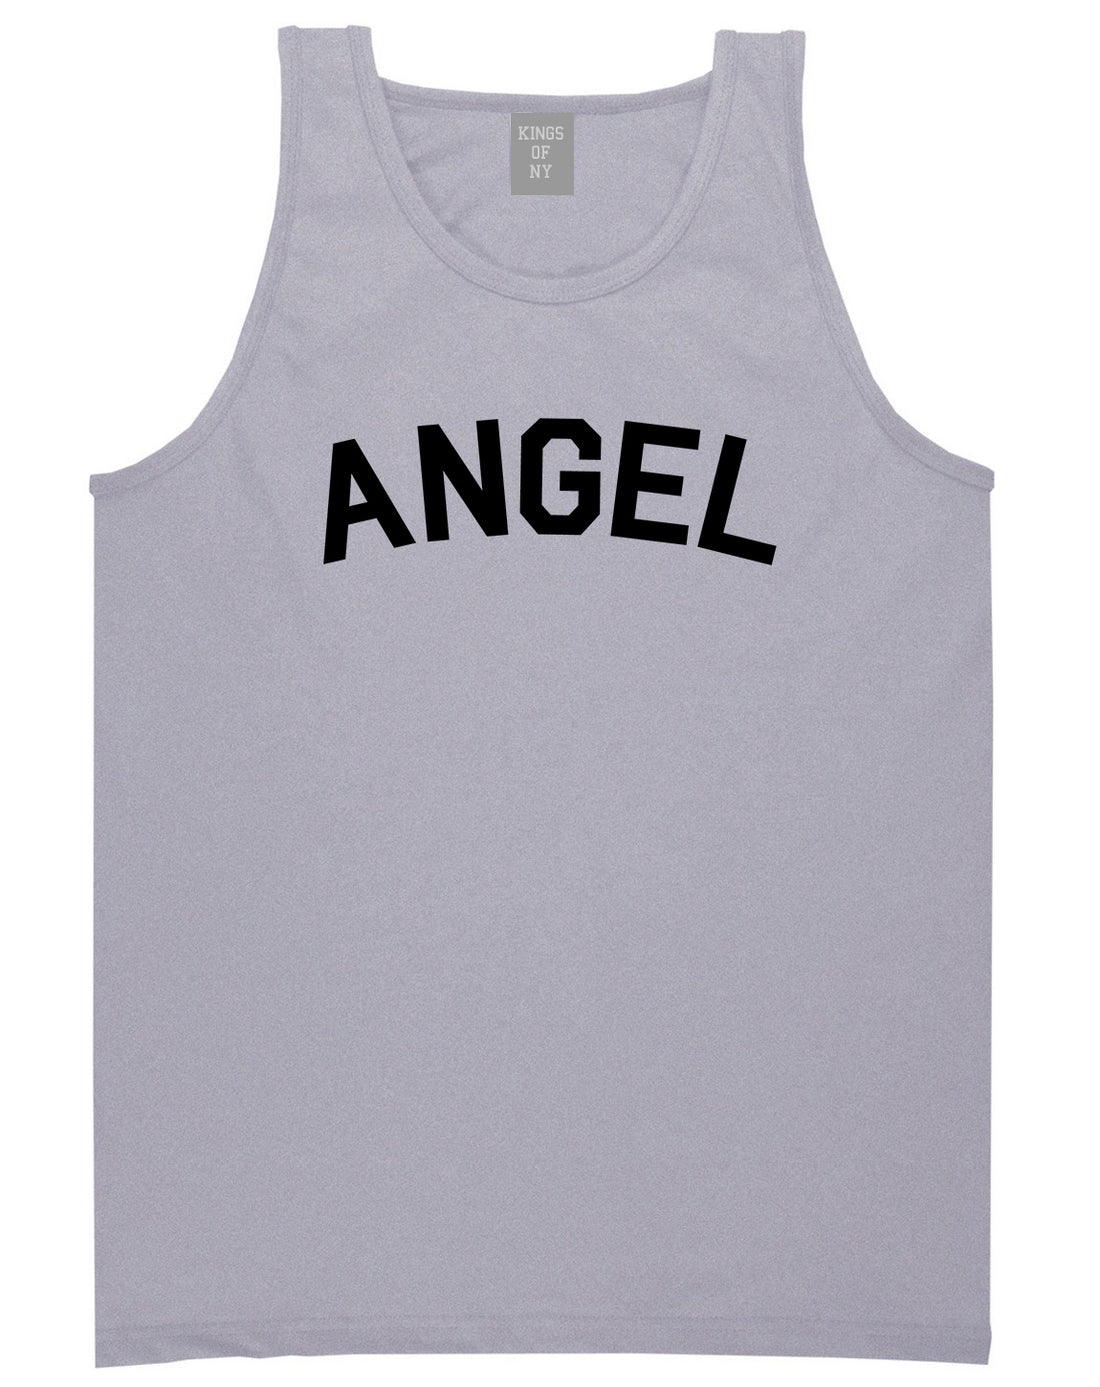 Angel Arch Good Tank Top Shirt in Grey